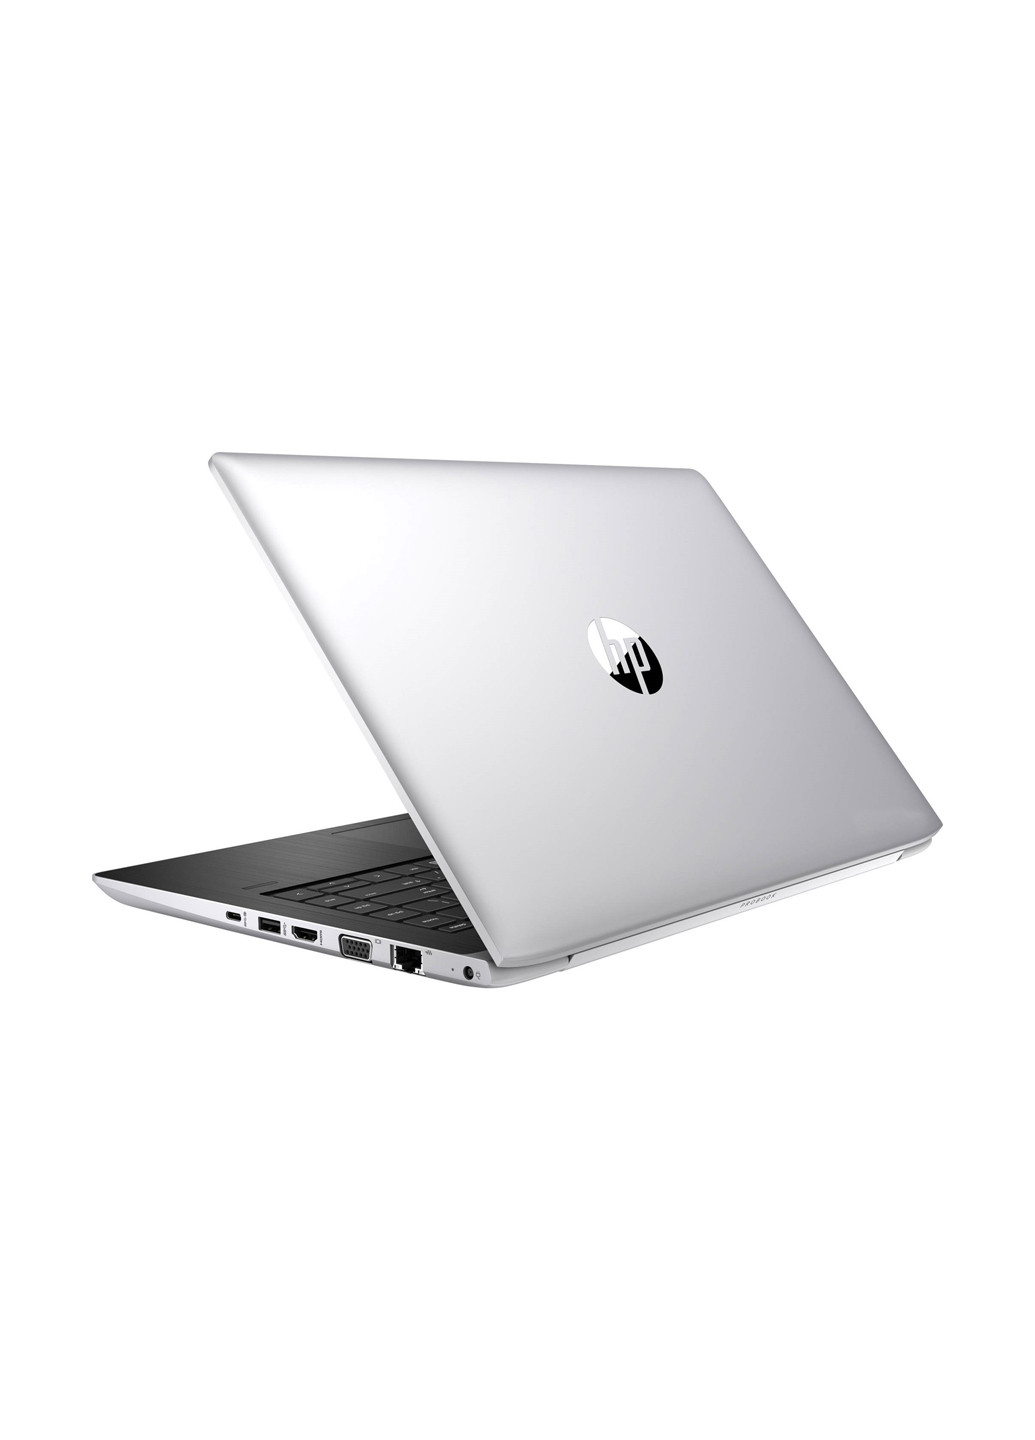 Ноутбук Silver HP probook 440 g5 (3sa11av_v26) (130617509)